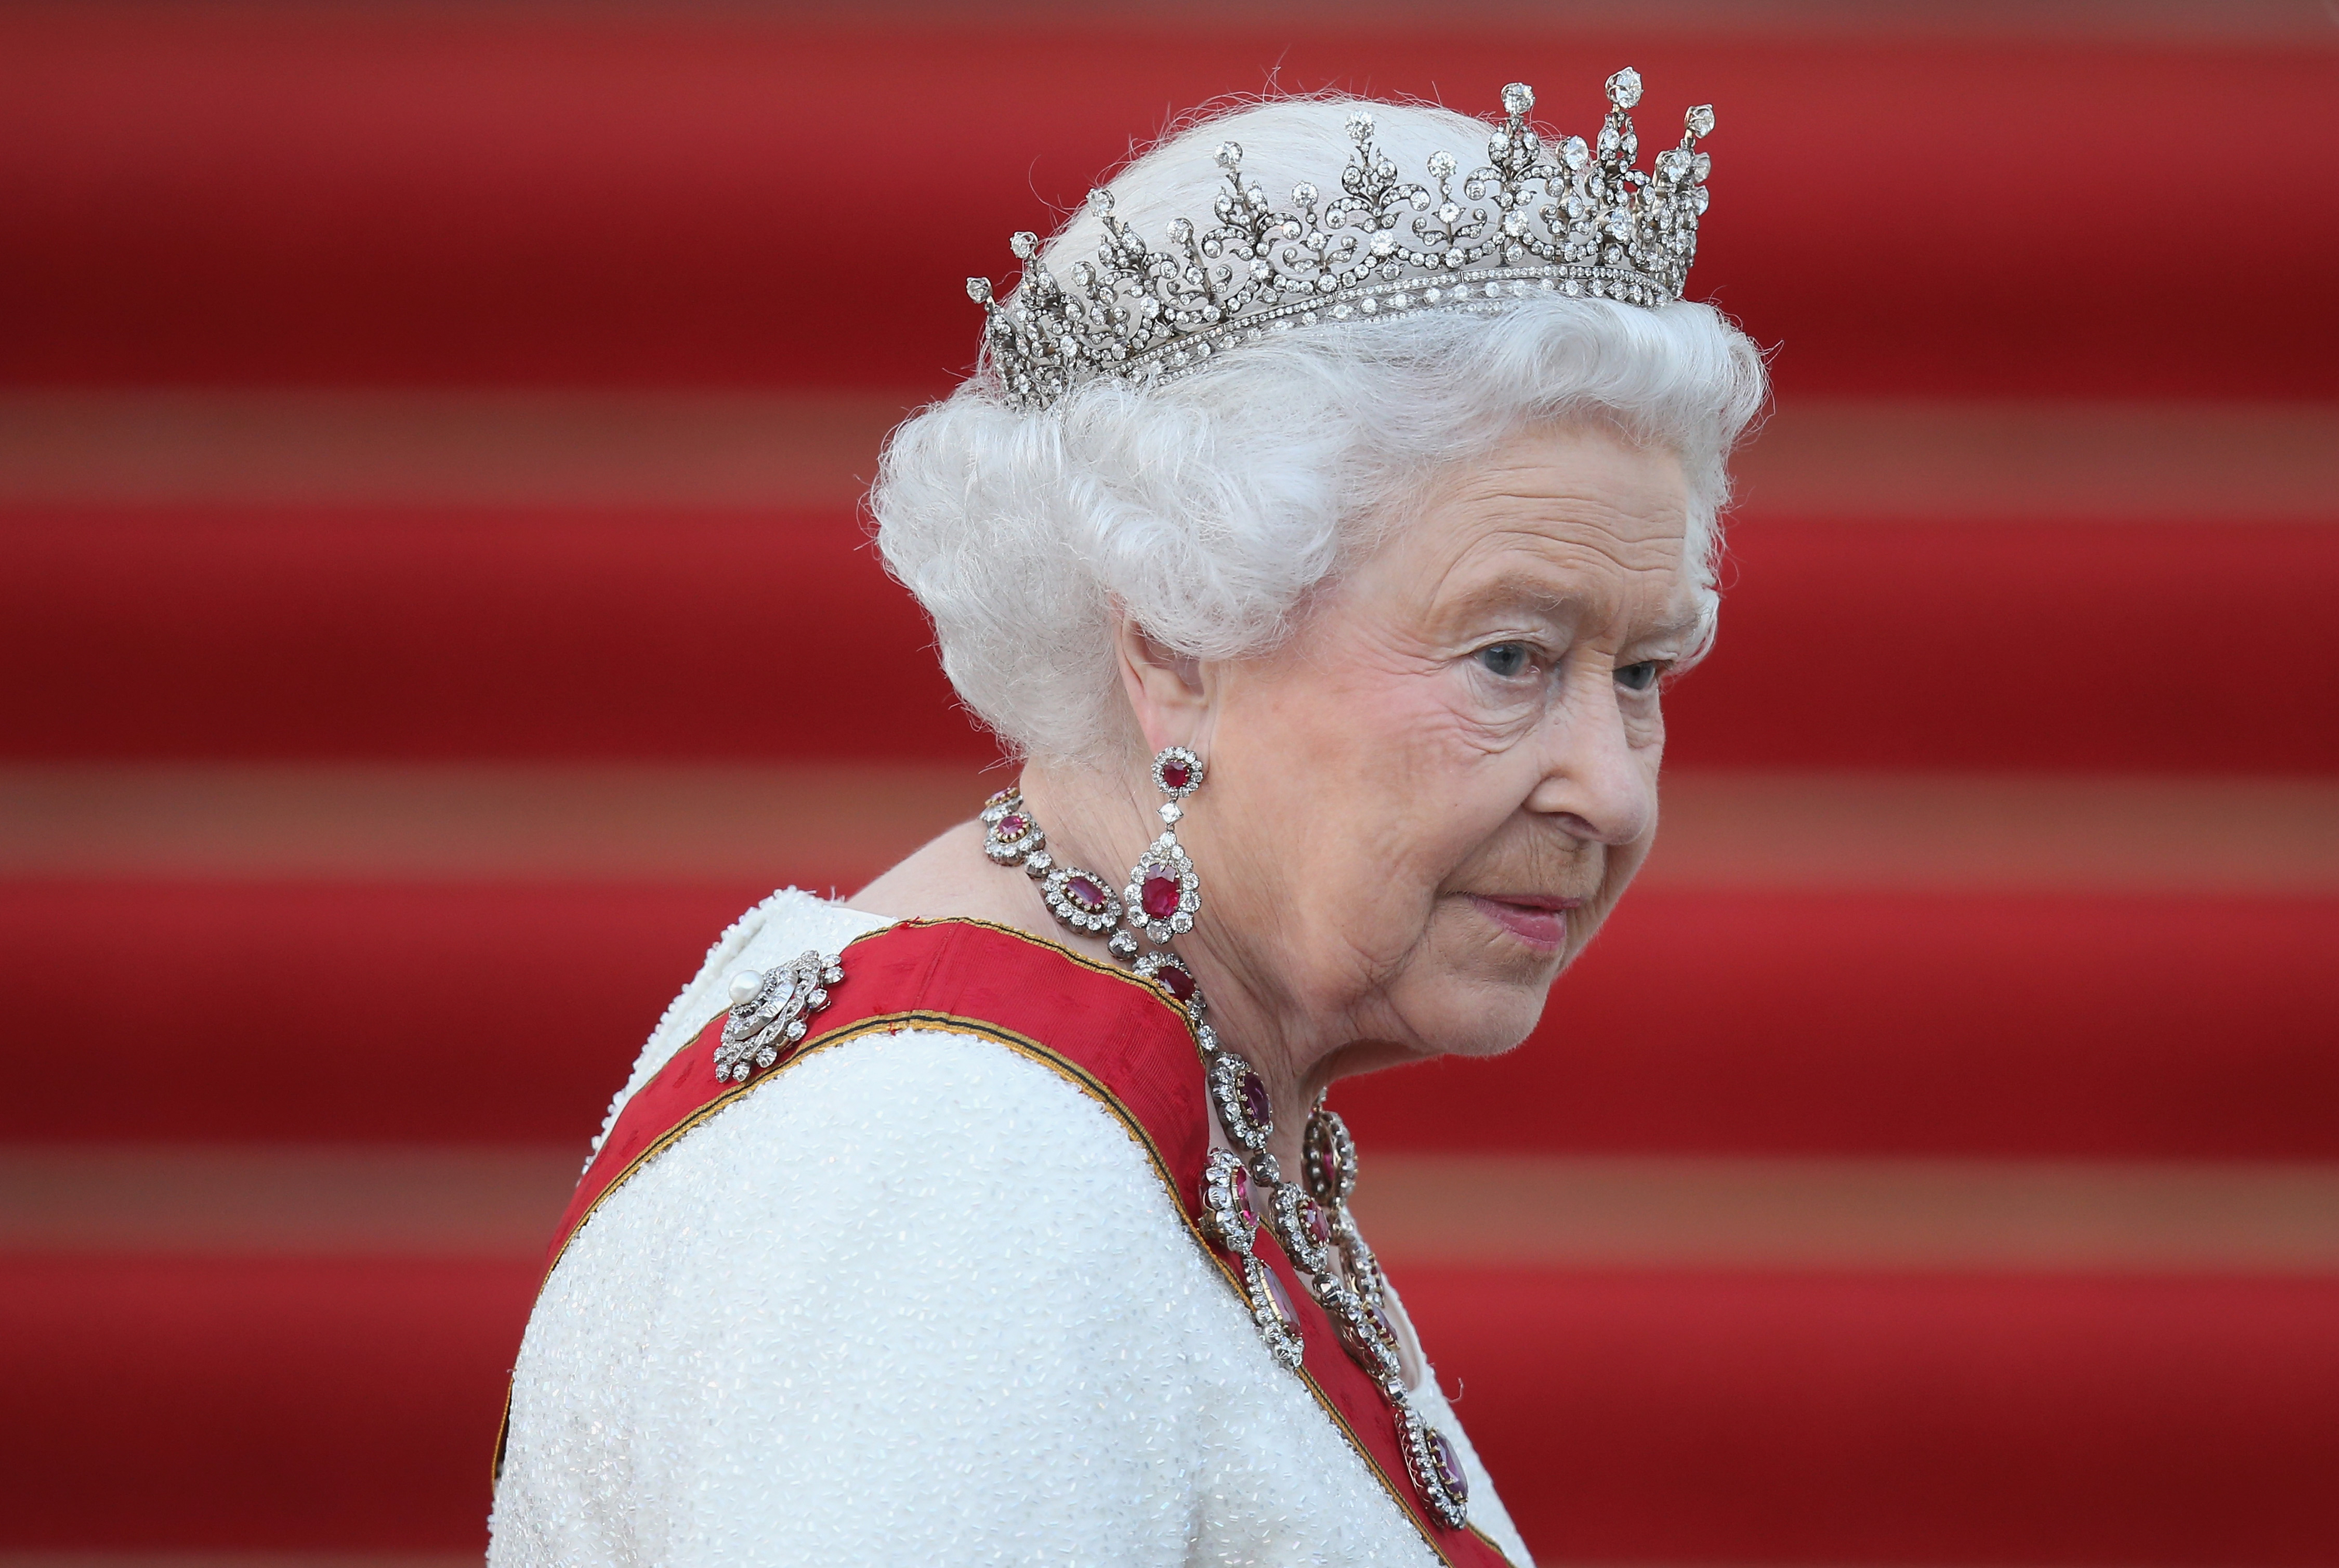 Queen Elizabeth II wearing a tiara and ceremonial robe